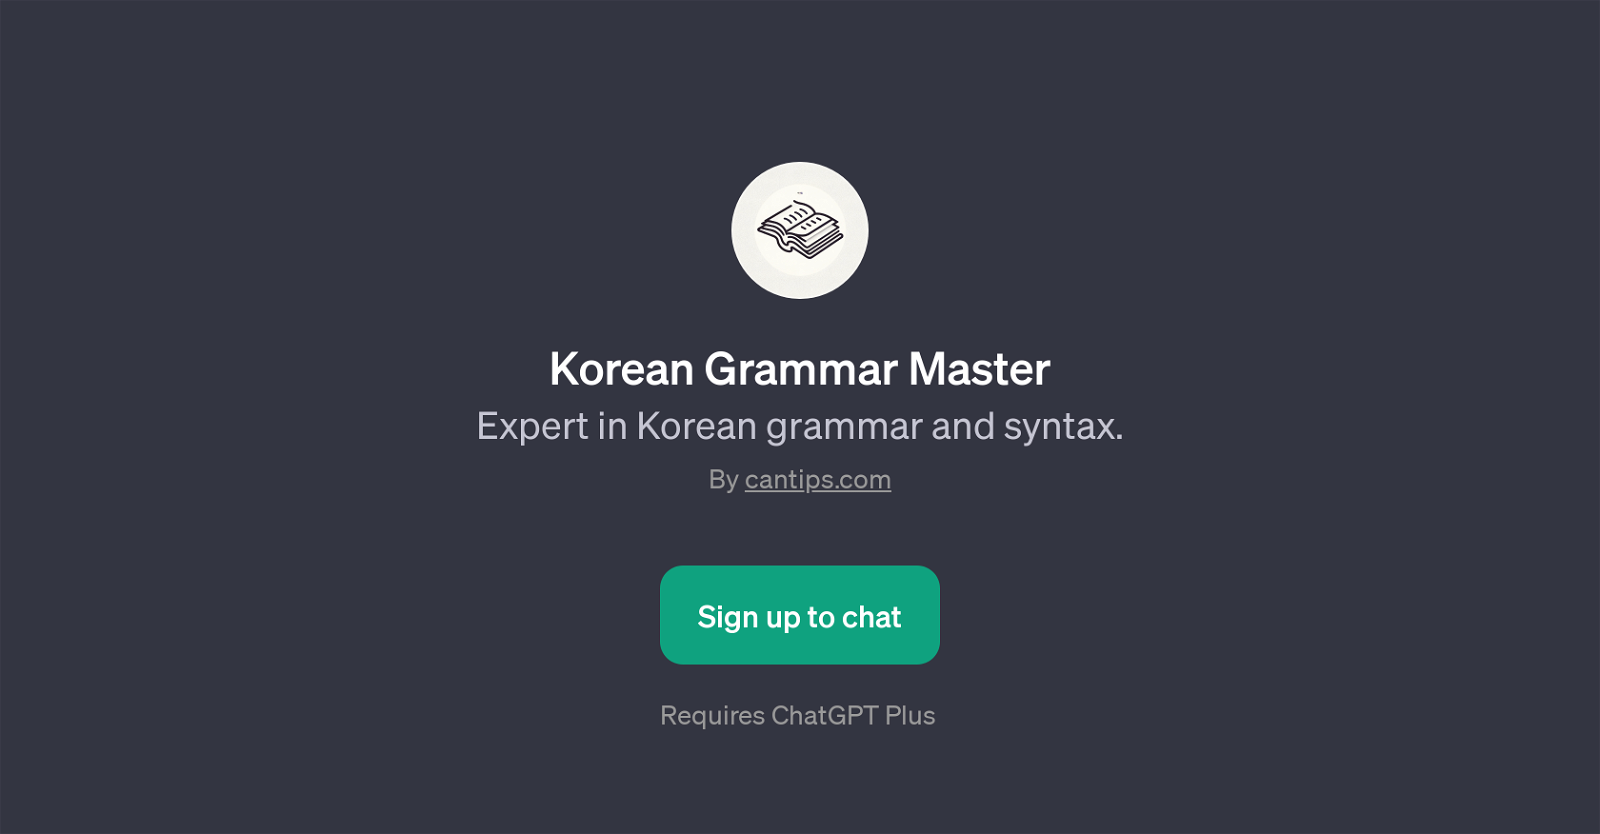 Korean Grammar Master website